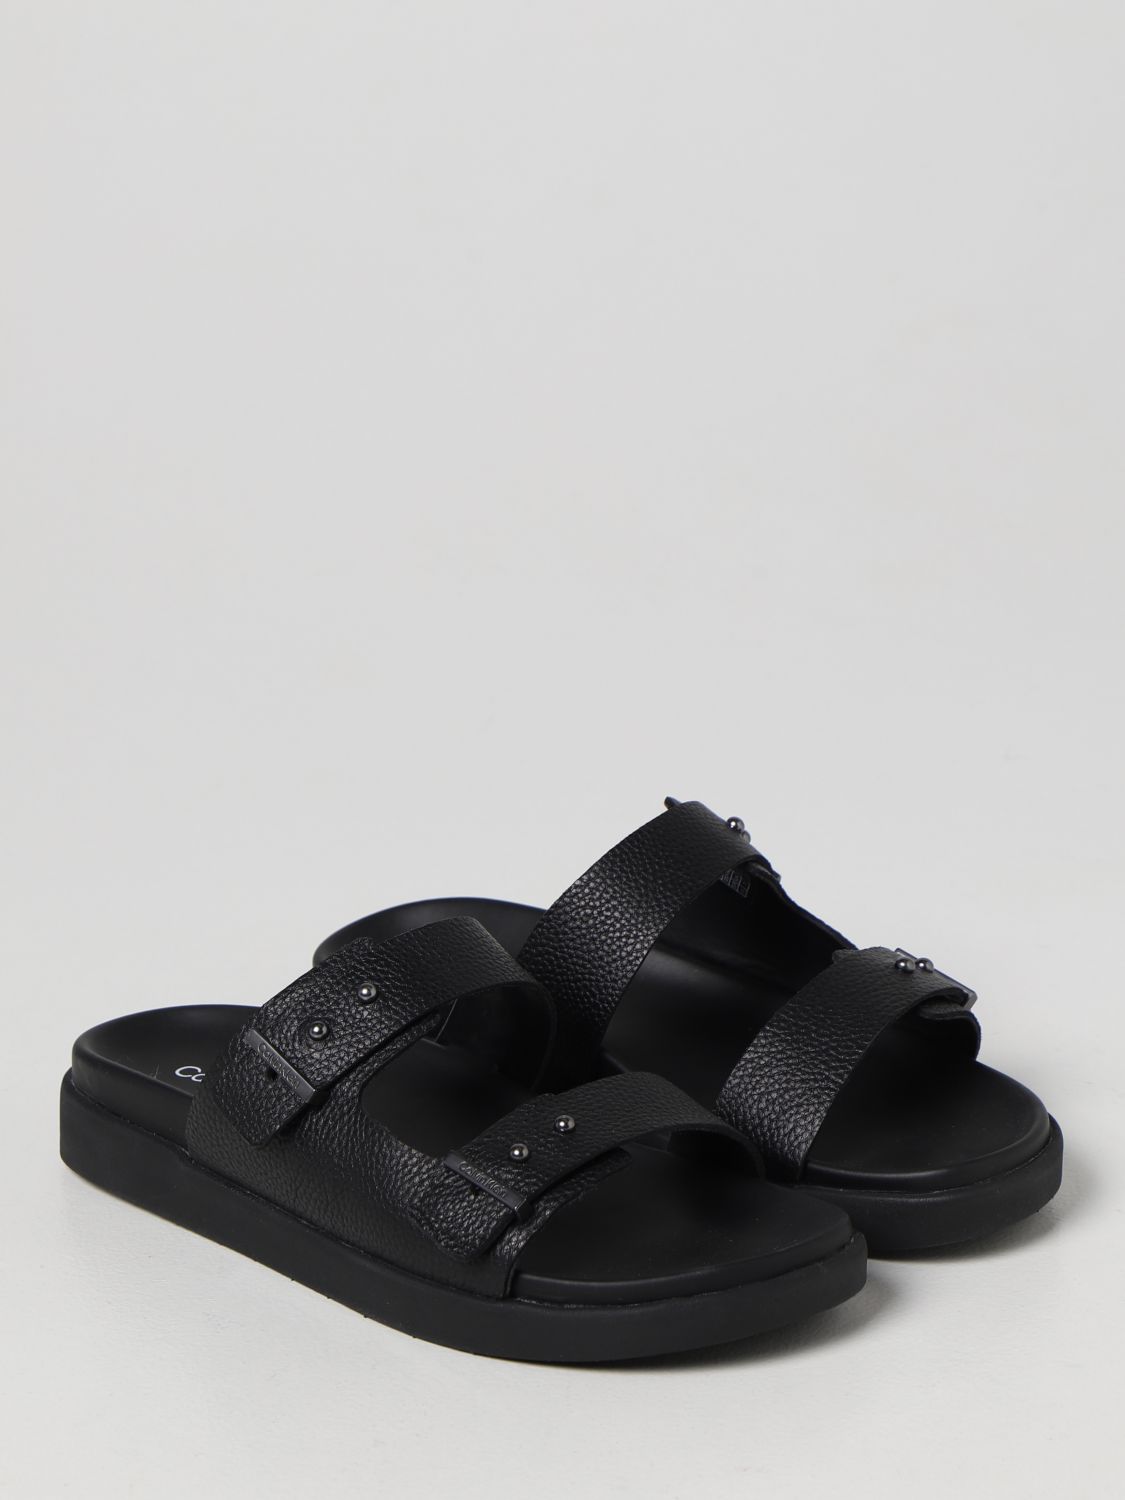 Calvin Klein Jeans Outlet: sandals for man - Black | Calvin Klein Jeans ...